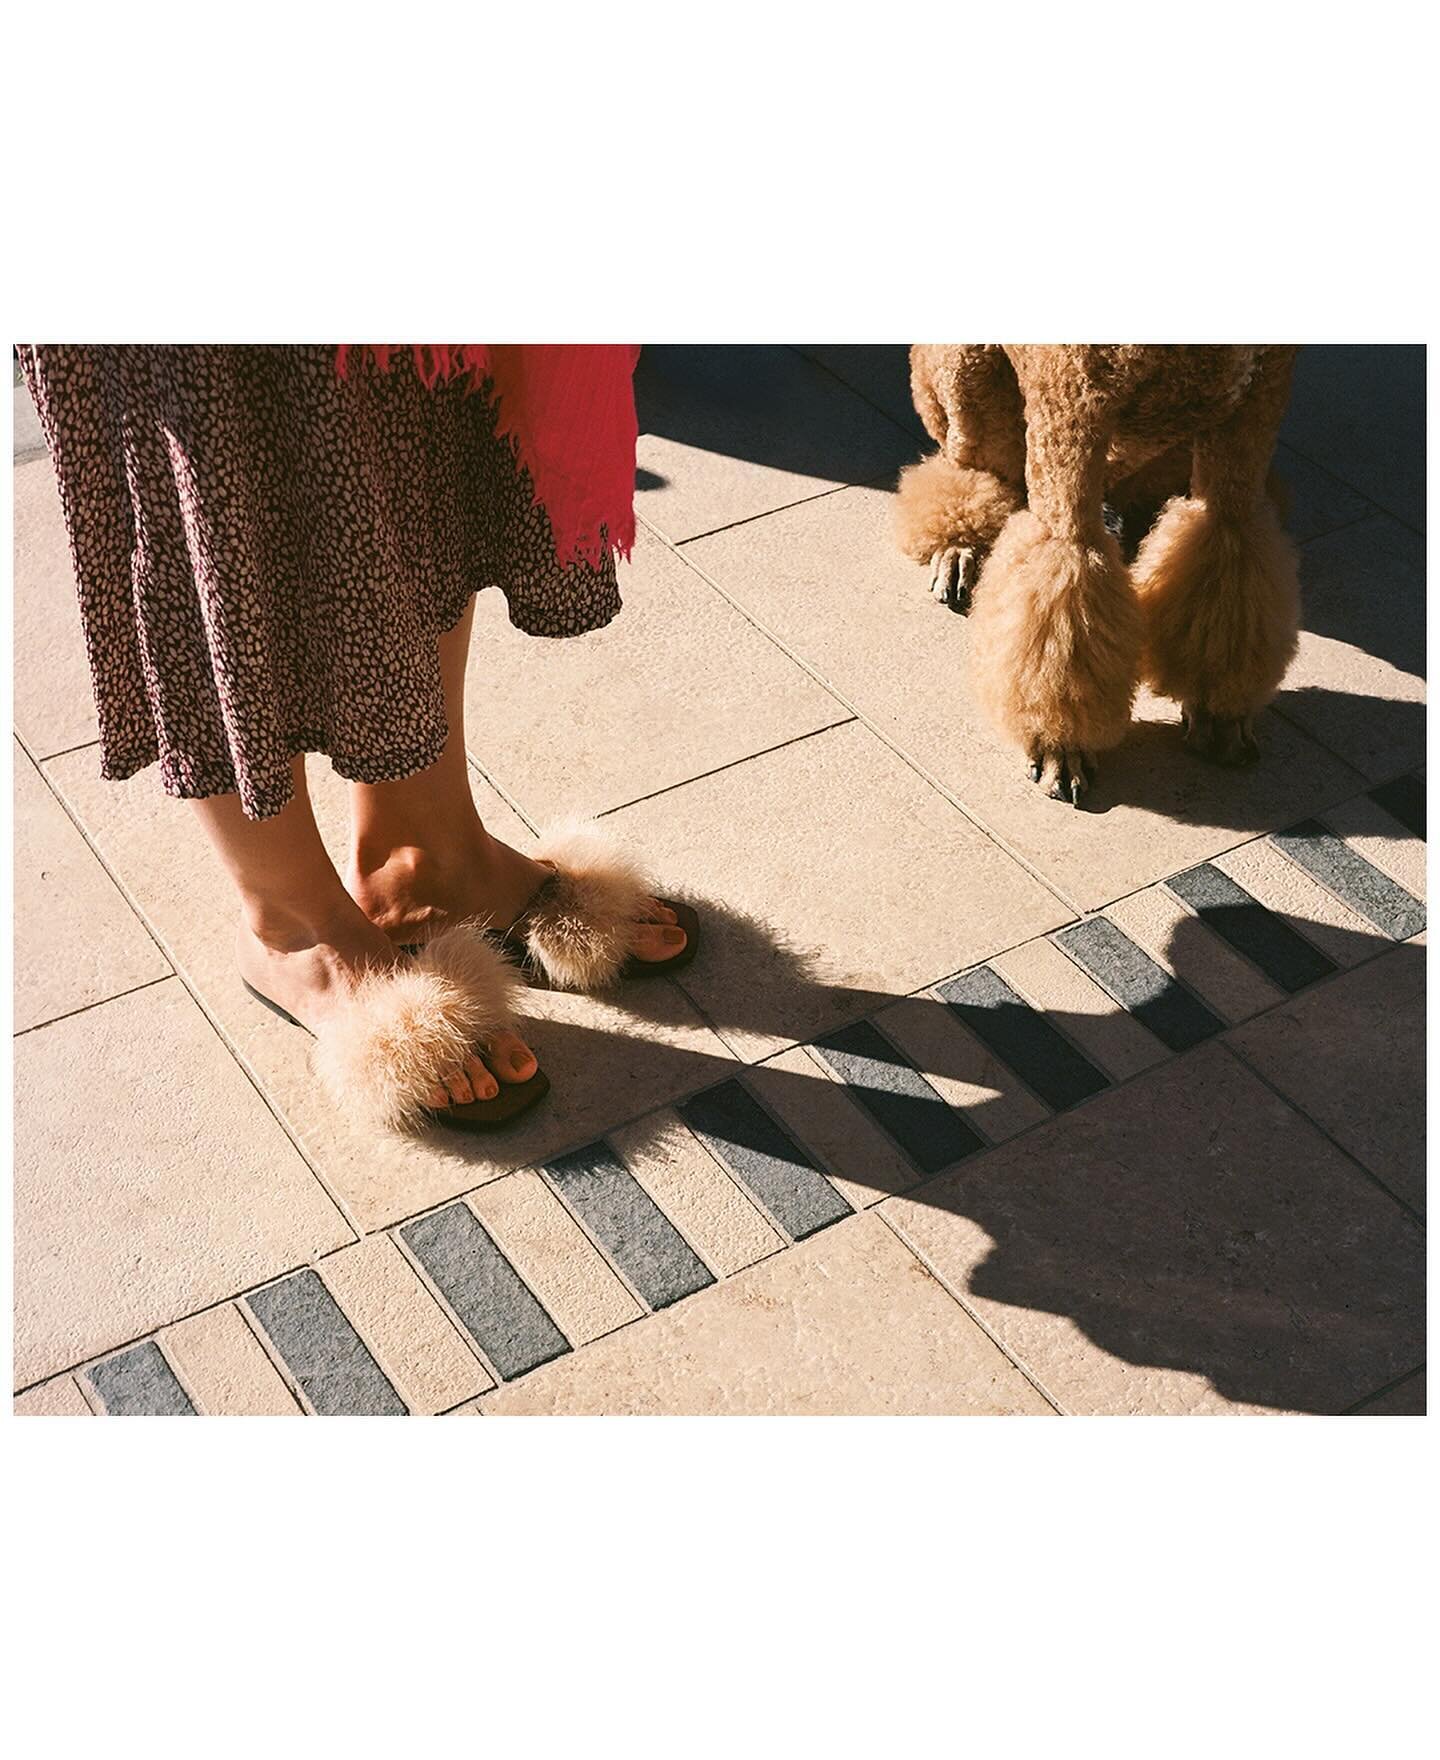 The Palm Desert Standard Poodle Promenade 🐩🎀
January 13, 2024
.
.
#madewithkodak 
.
.
#mamiya645 #standardpoodle #standardpoodlesofinstagram #palmdesertpoodles #palmdesertpoodleparade #🐩